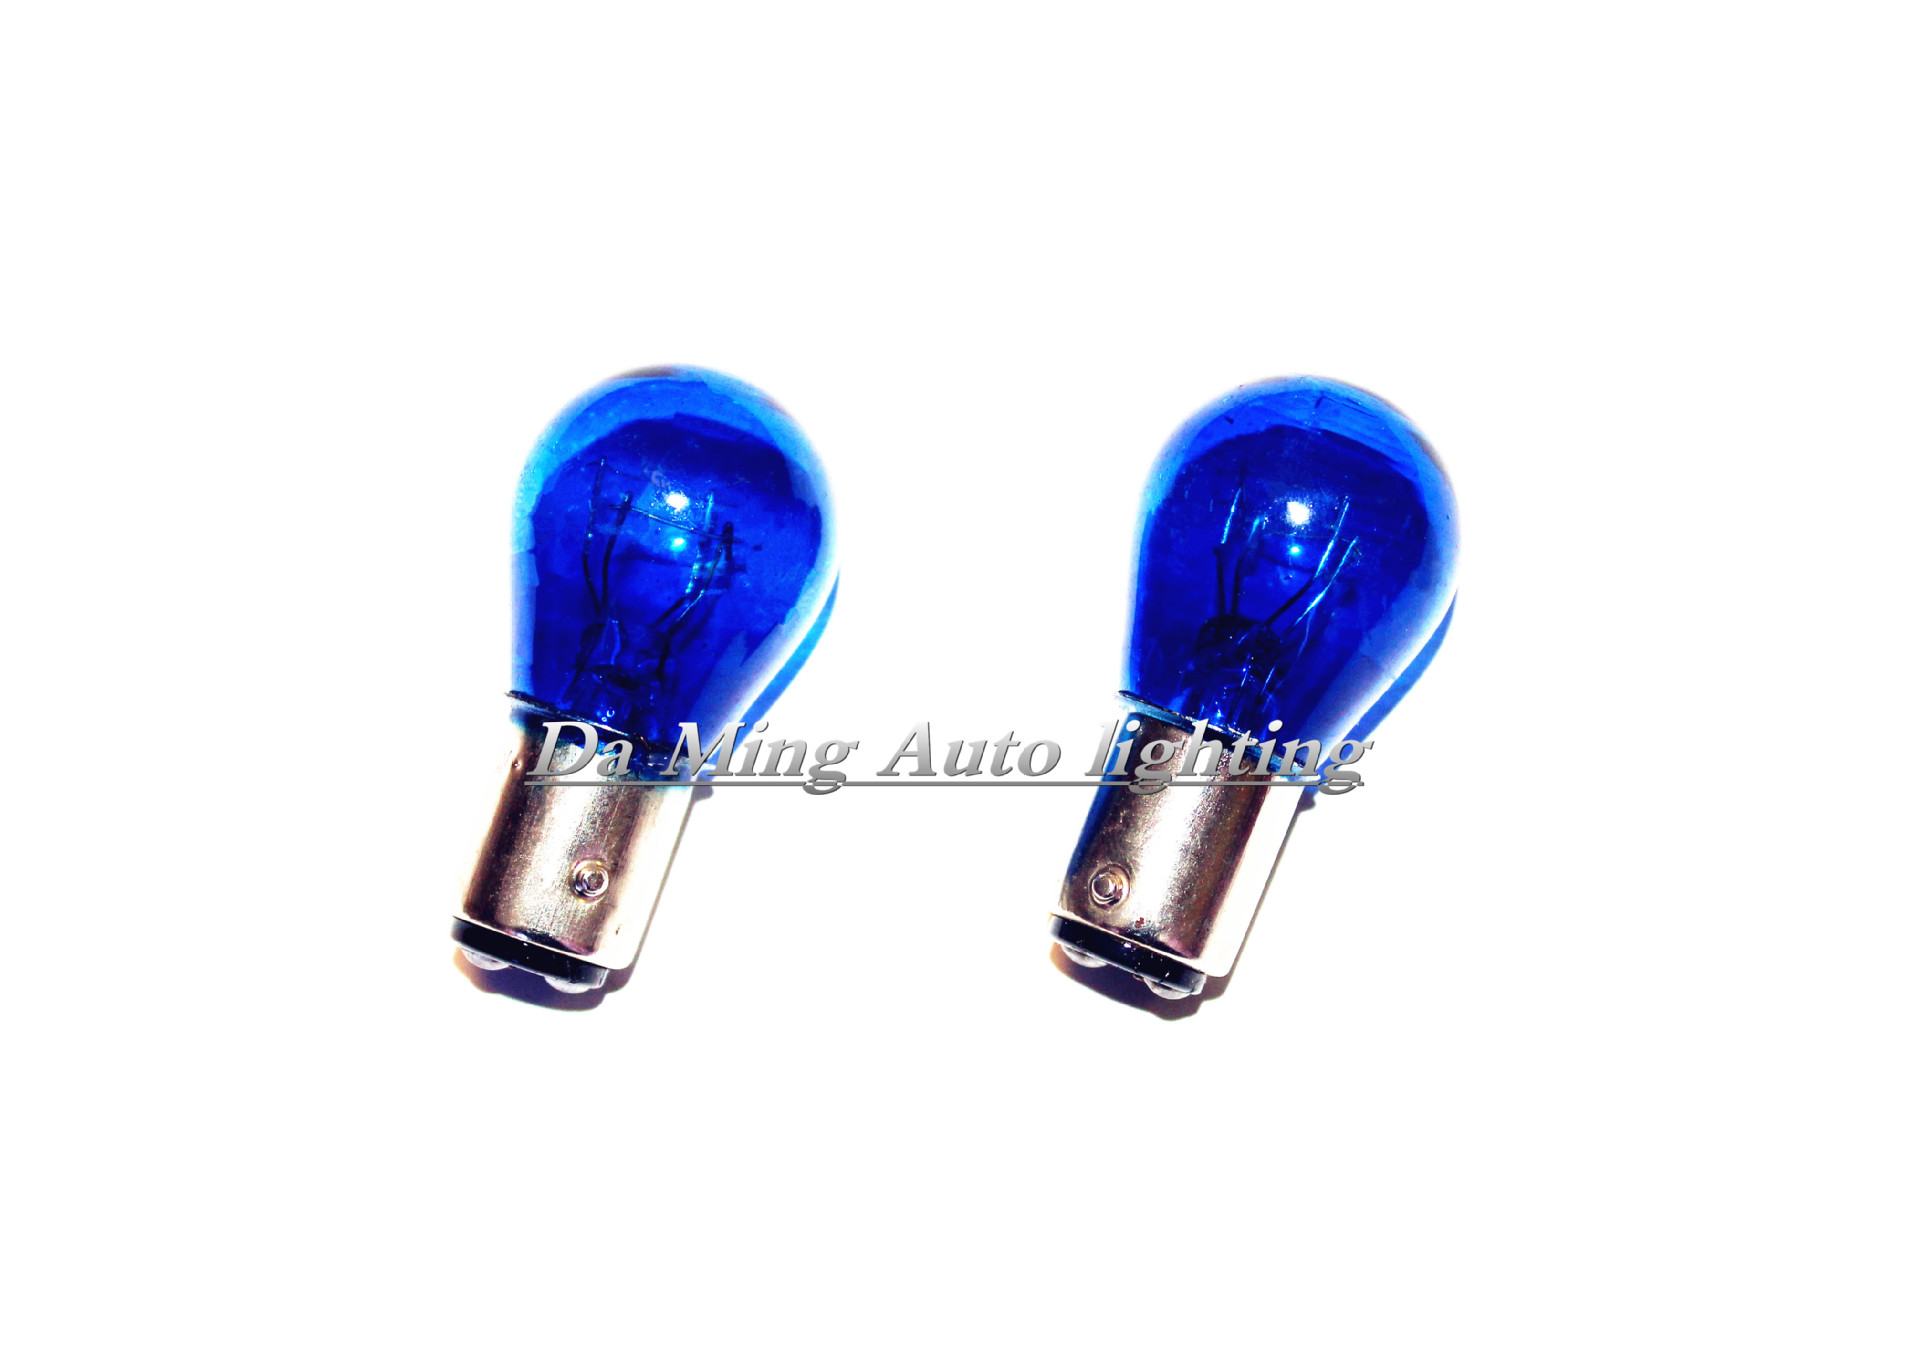 1157 1034 Auto Bulbs S25 12V21/5W BAY15D stoplight Signal lights Taillight